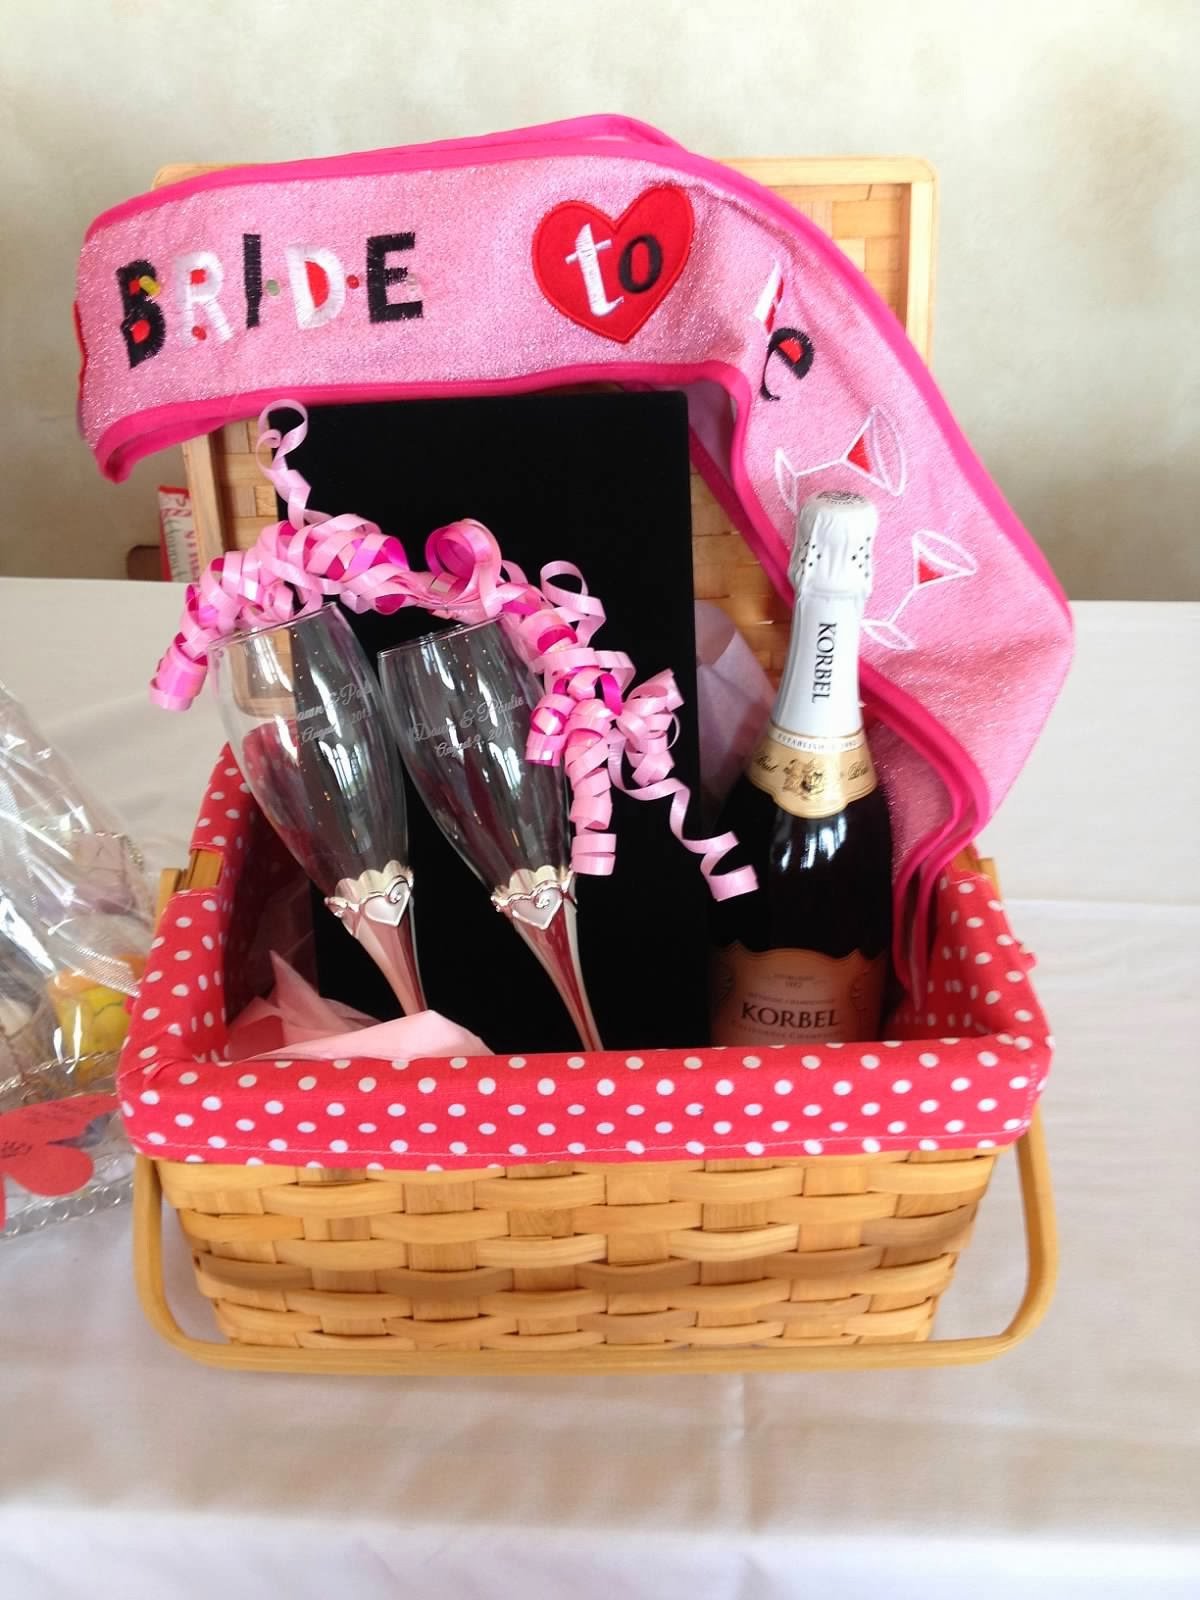 Bride Gift Basket Ideas
 2 Girls 1 Year 730 Moments to Wedding Wednesdays